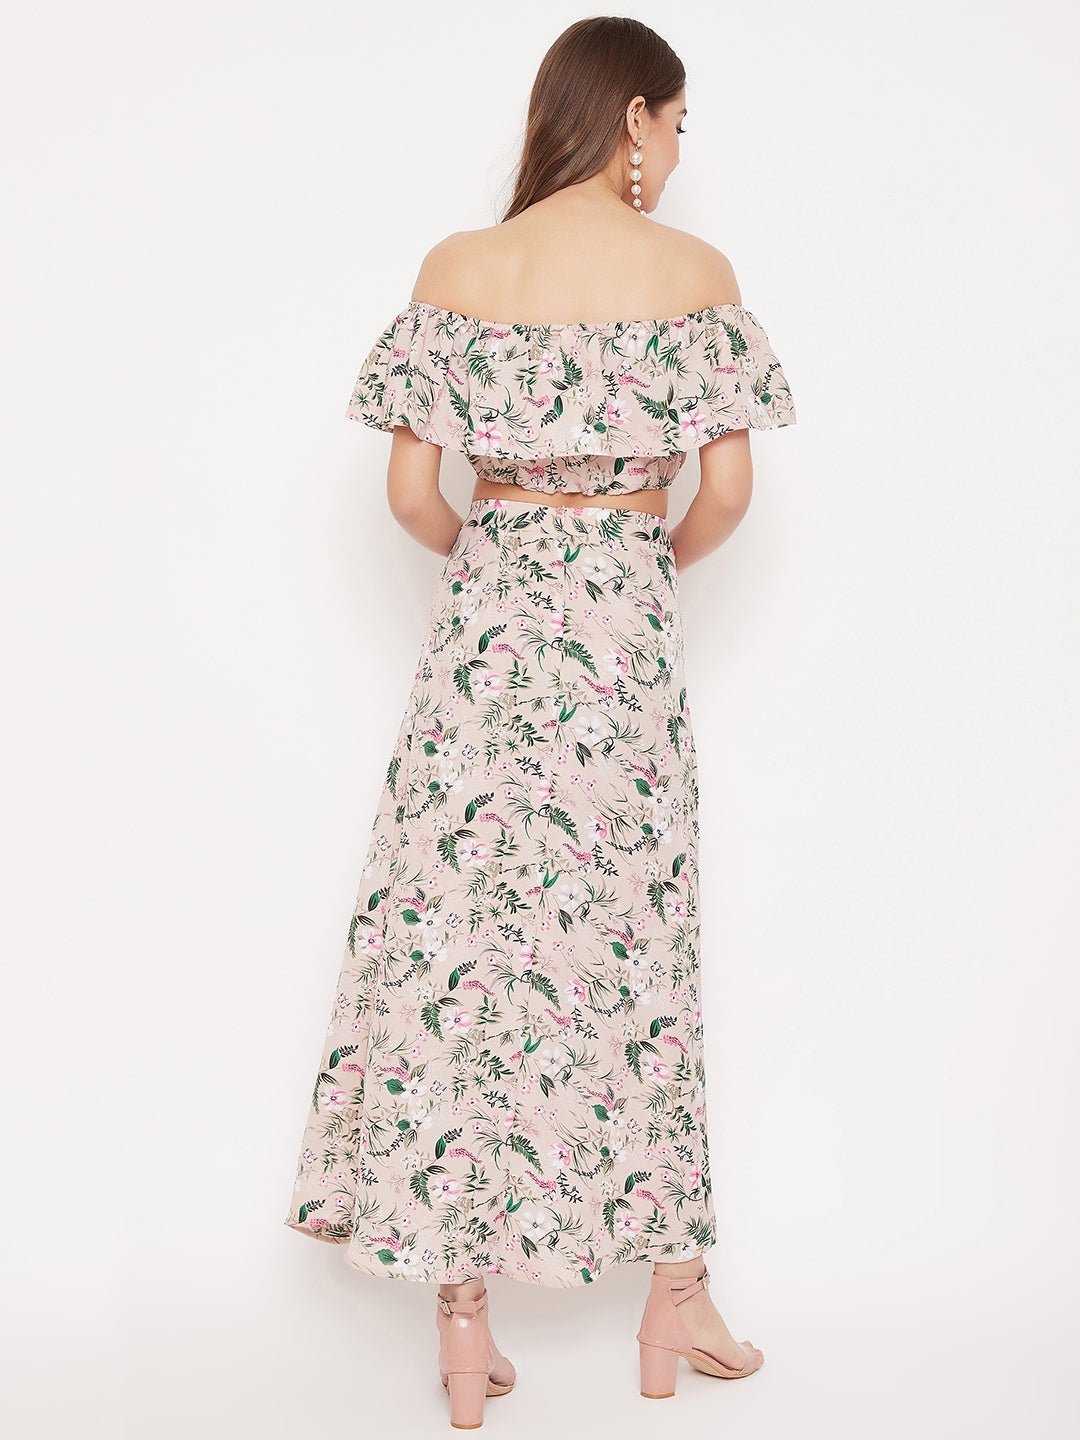 Folk Republic Beige Floral Print Co-Ord Dress Set - #folk republic#